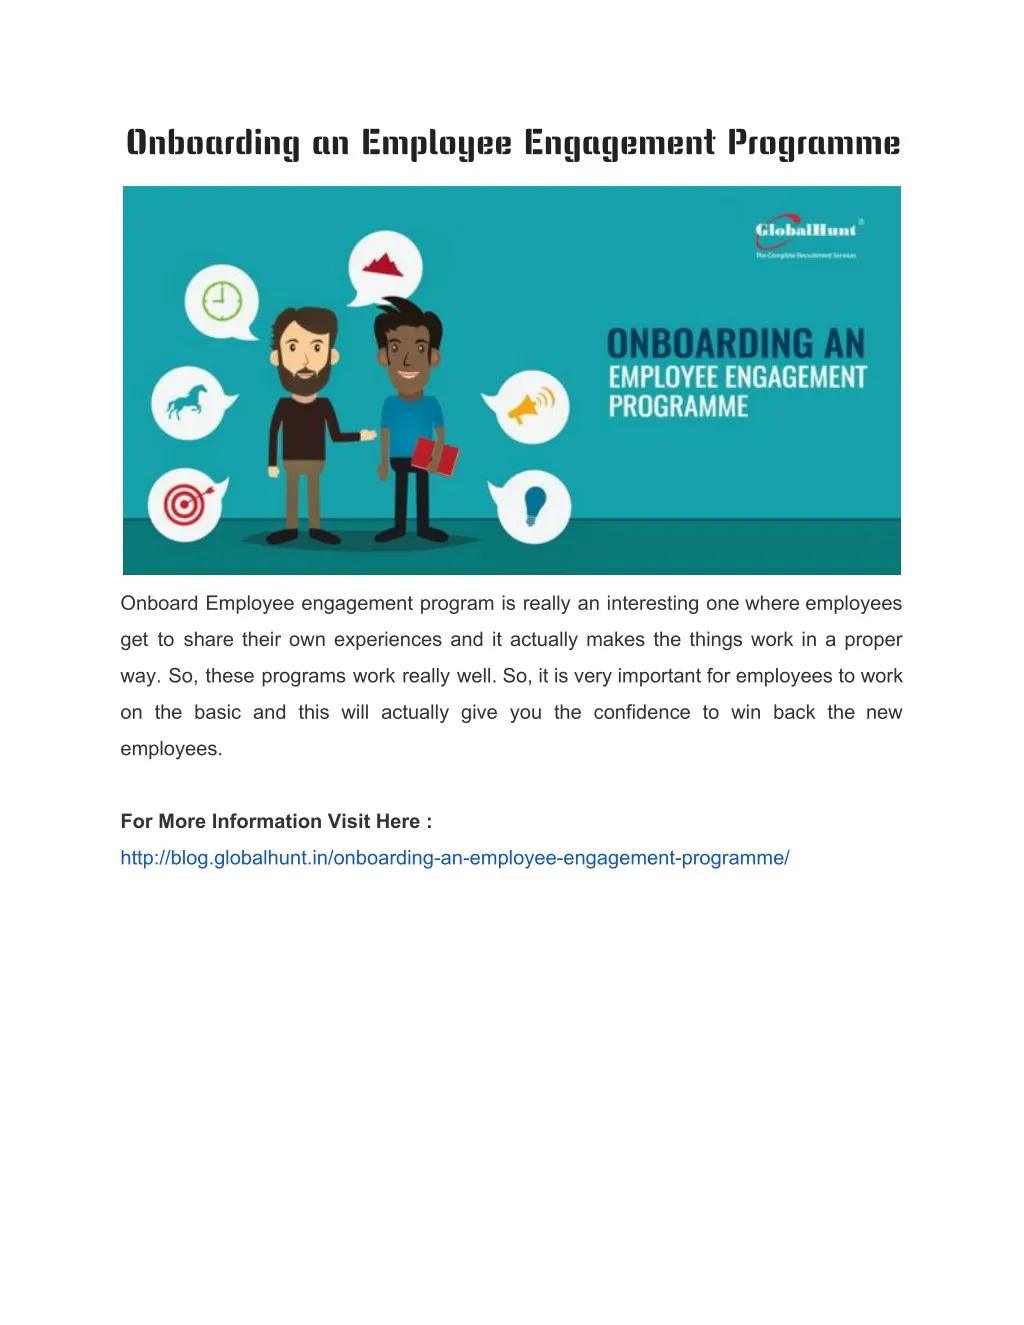 onboarding an employee engagement programme